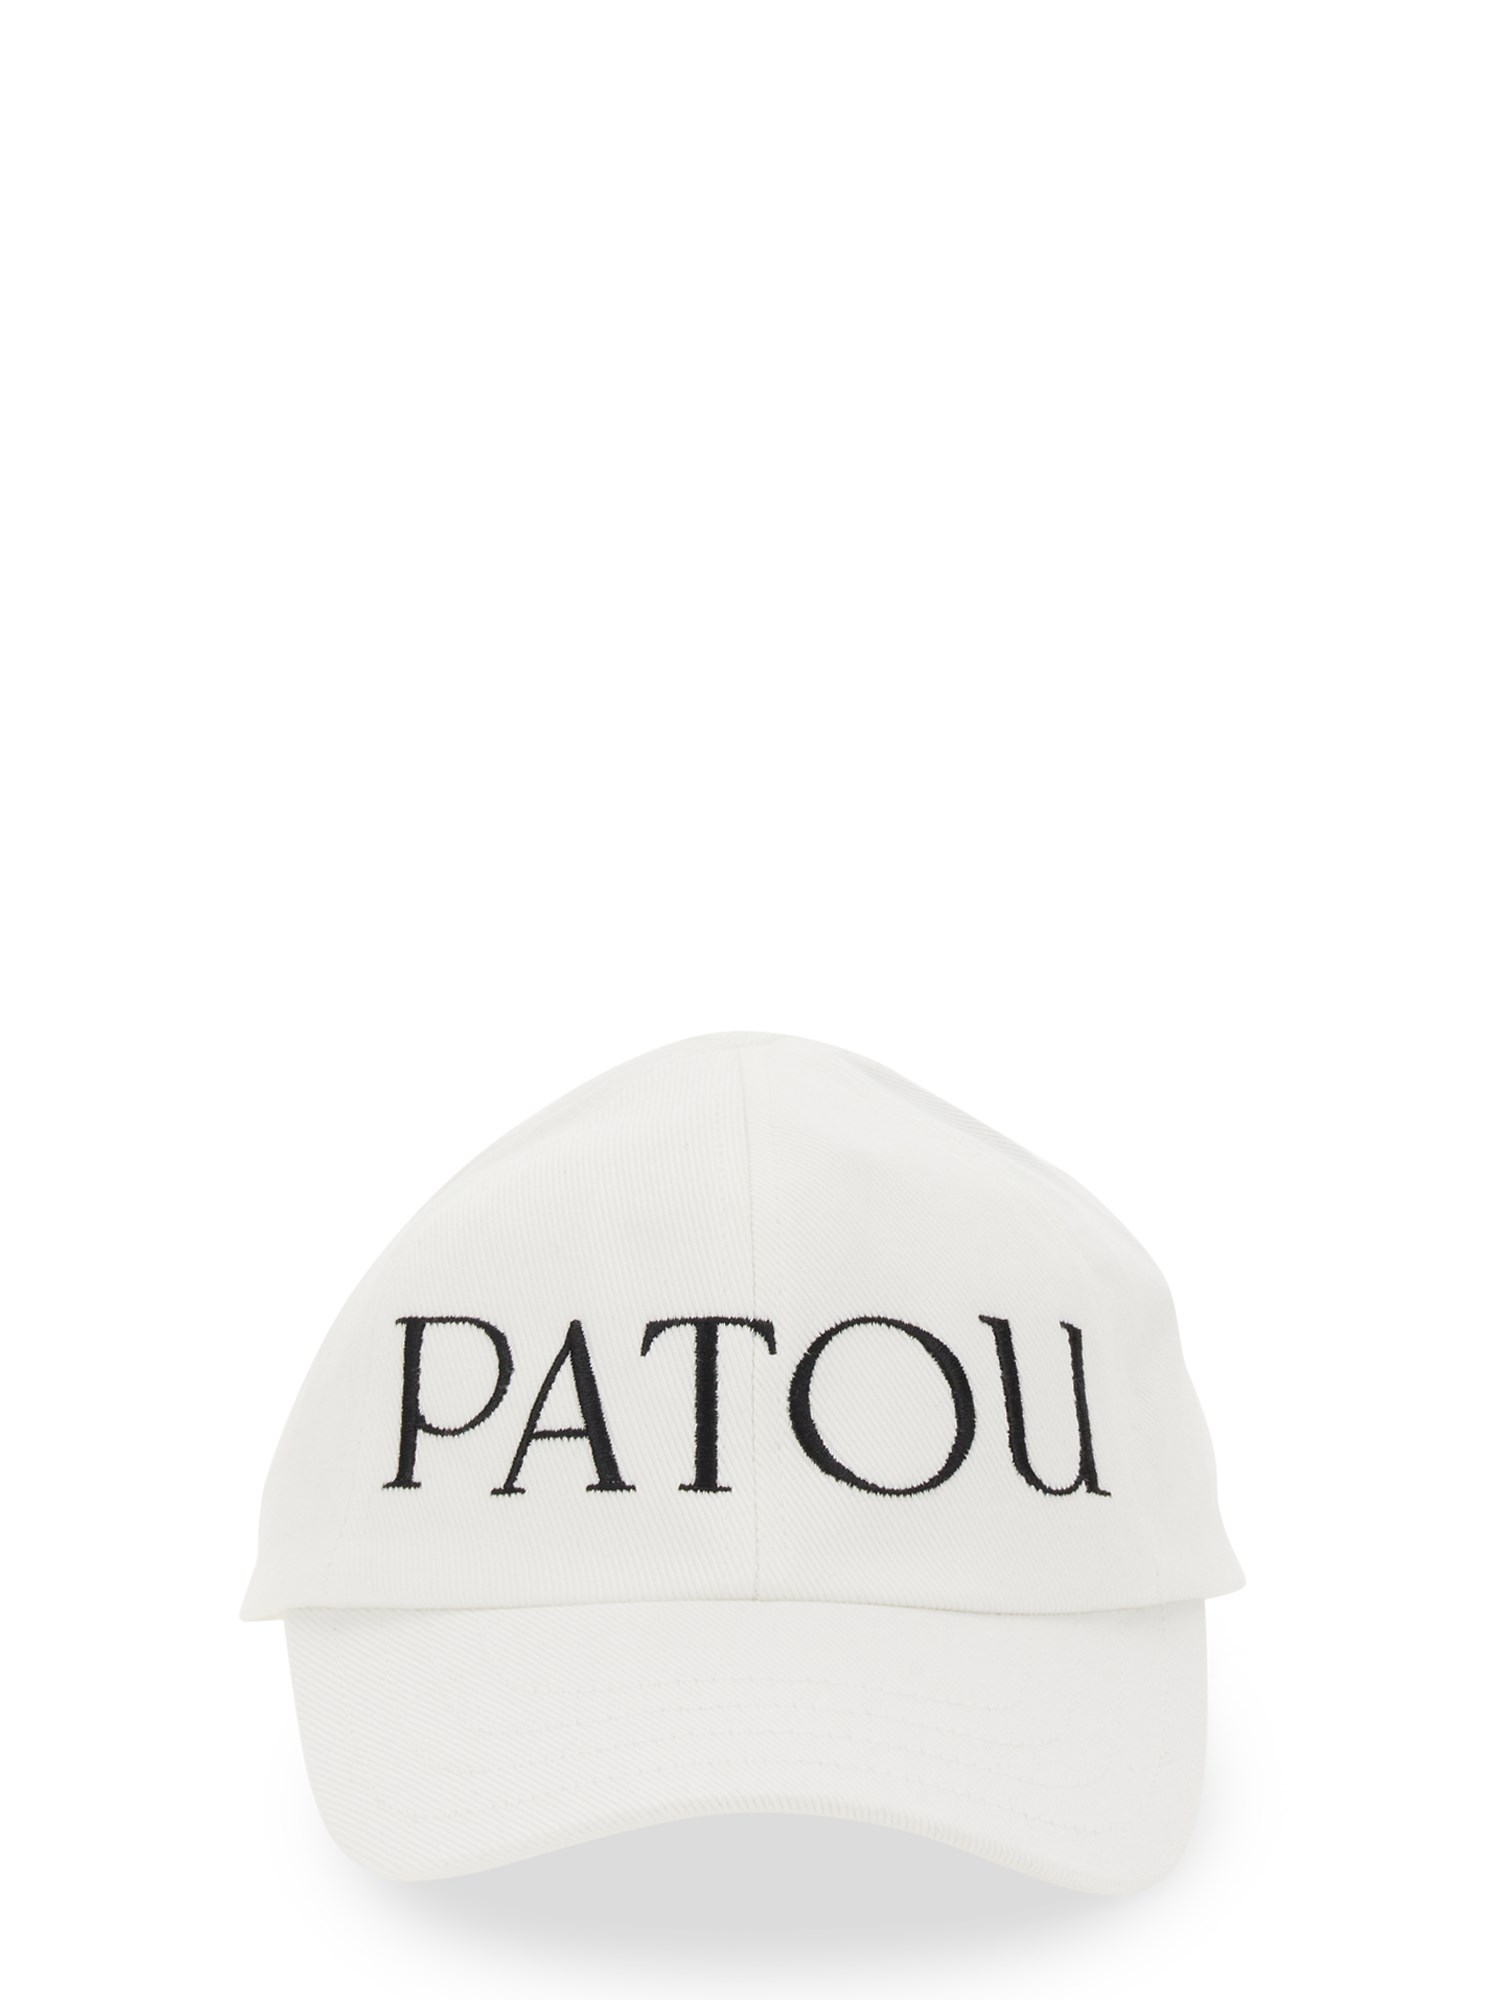 patou baseball hat with logo